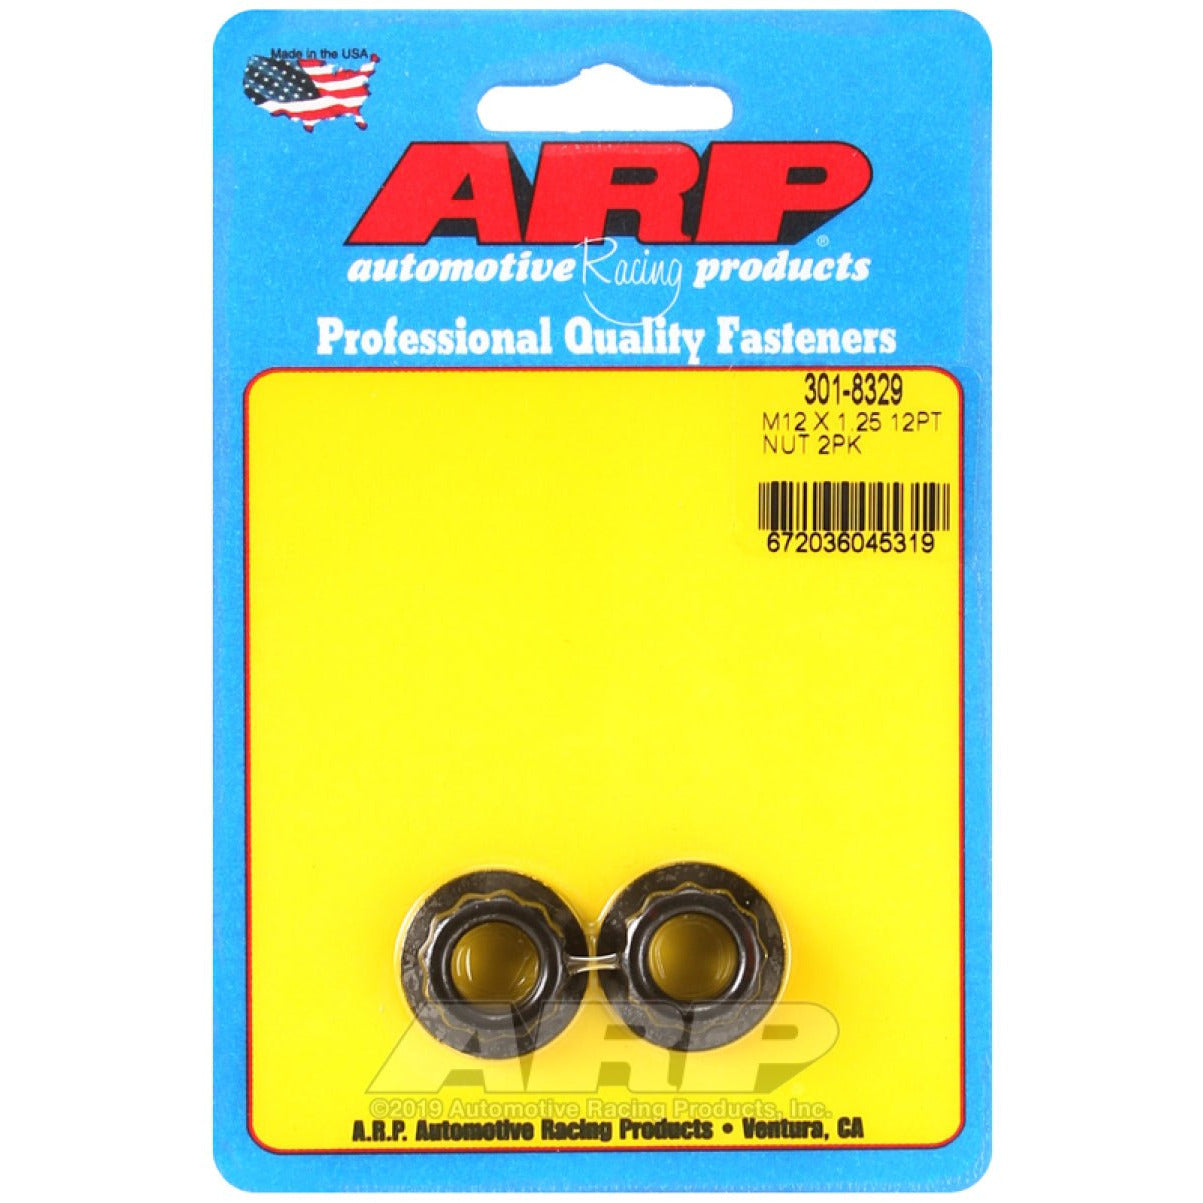 ARP M12 x 1.25 16mm socket 12pt Nut Kit (Pack of 2) ARP Hardware Kits - Other